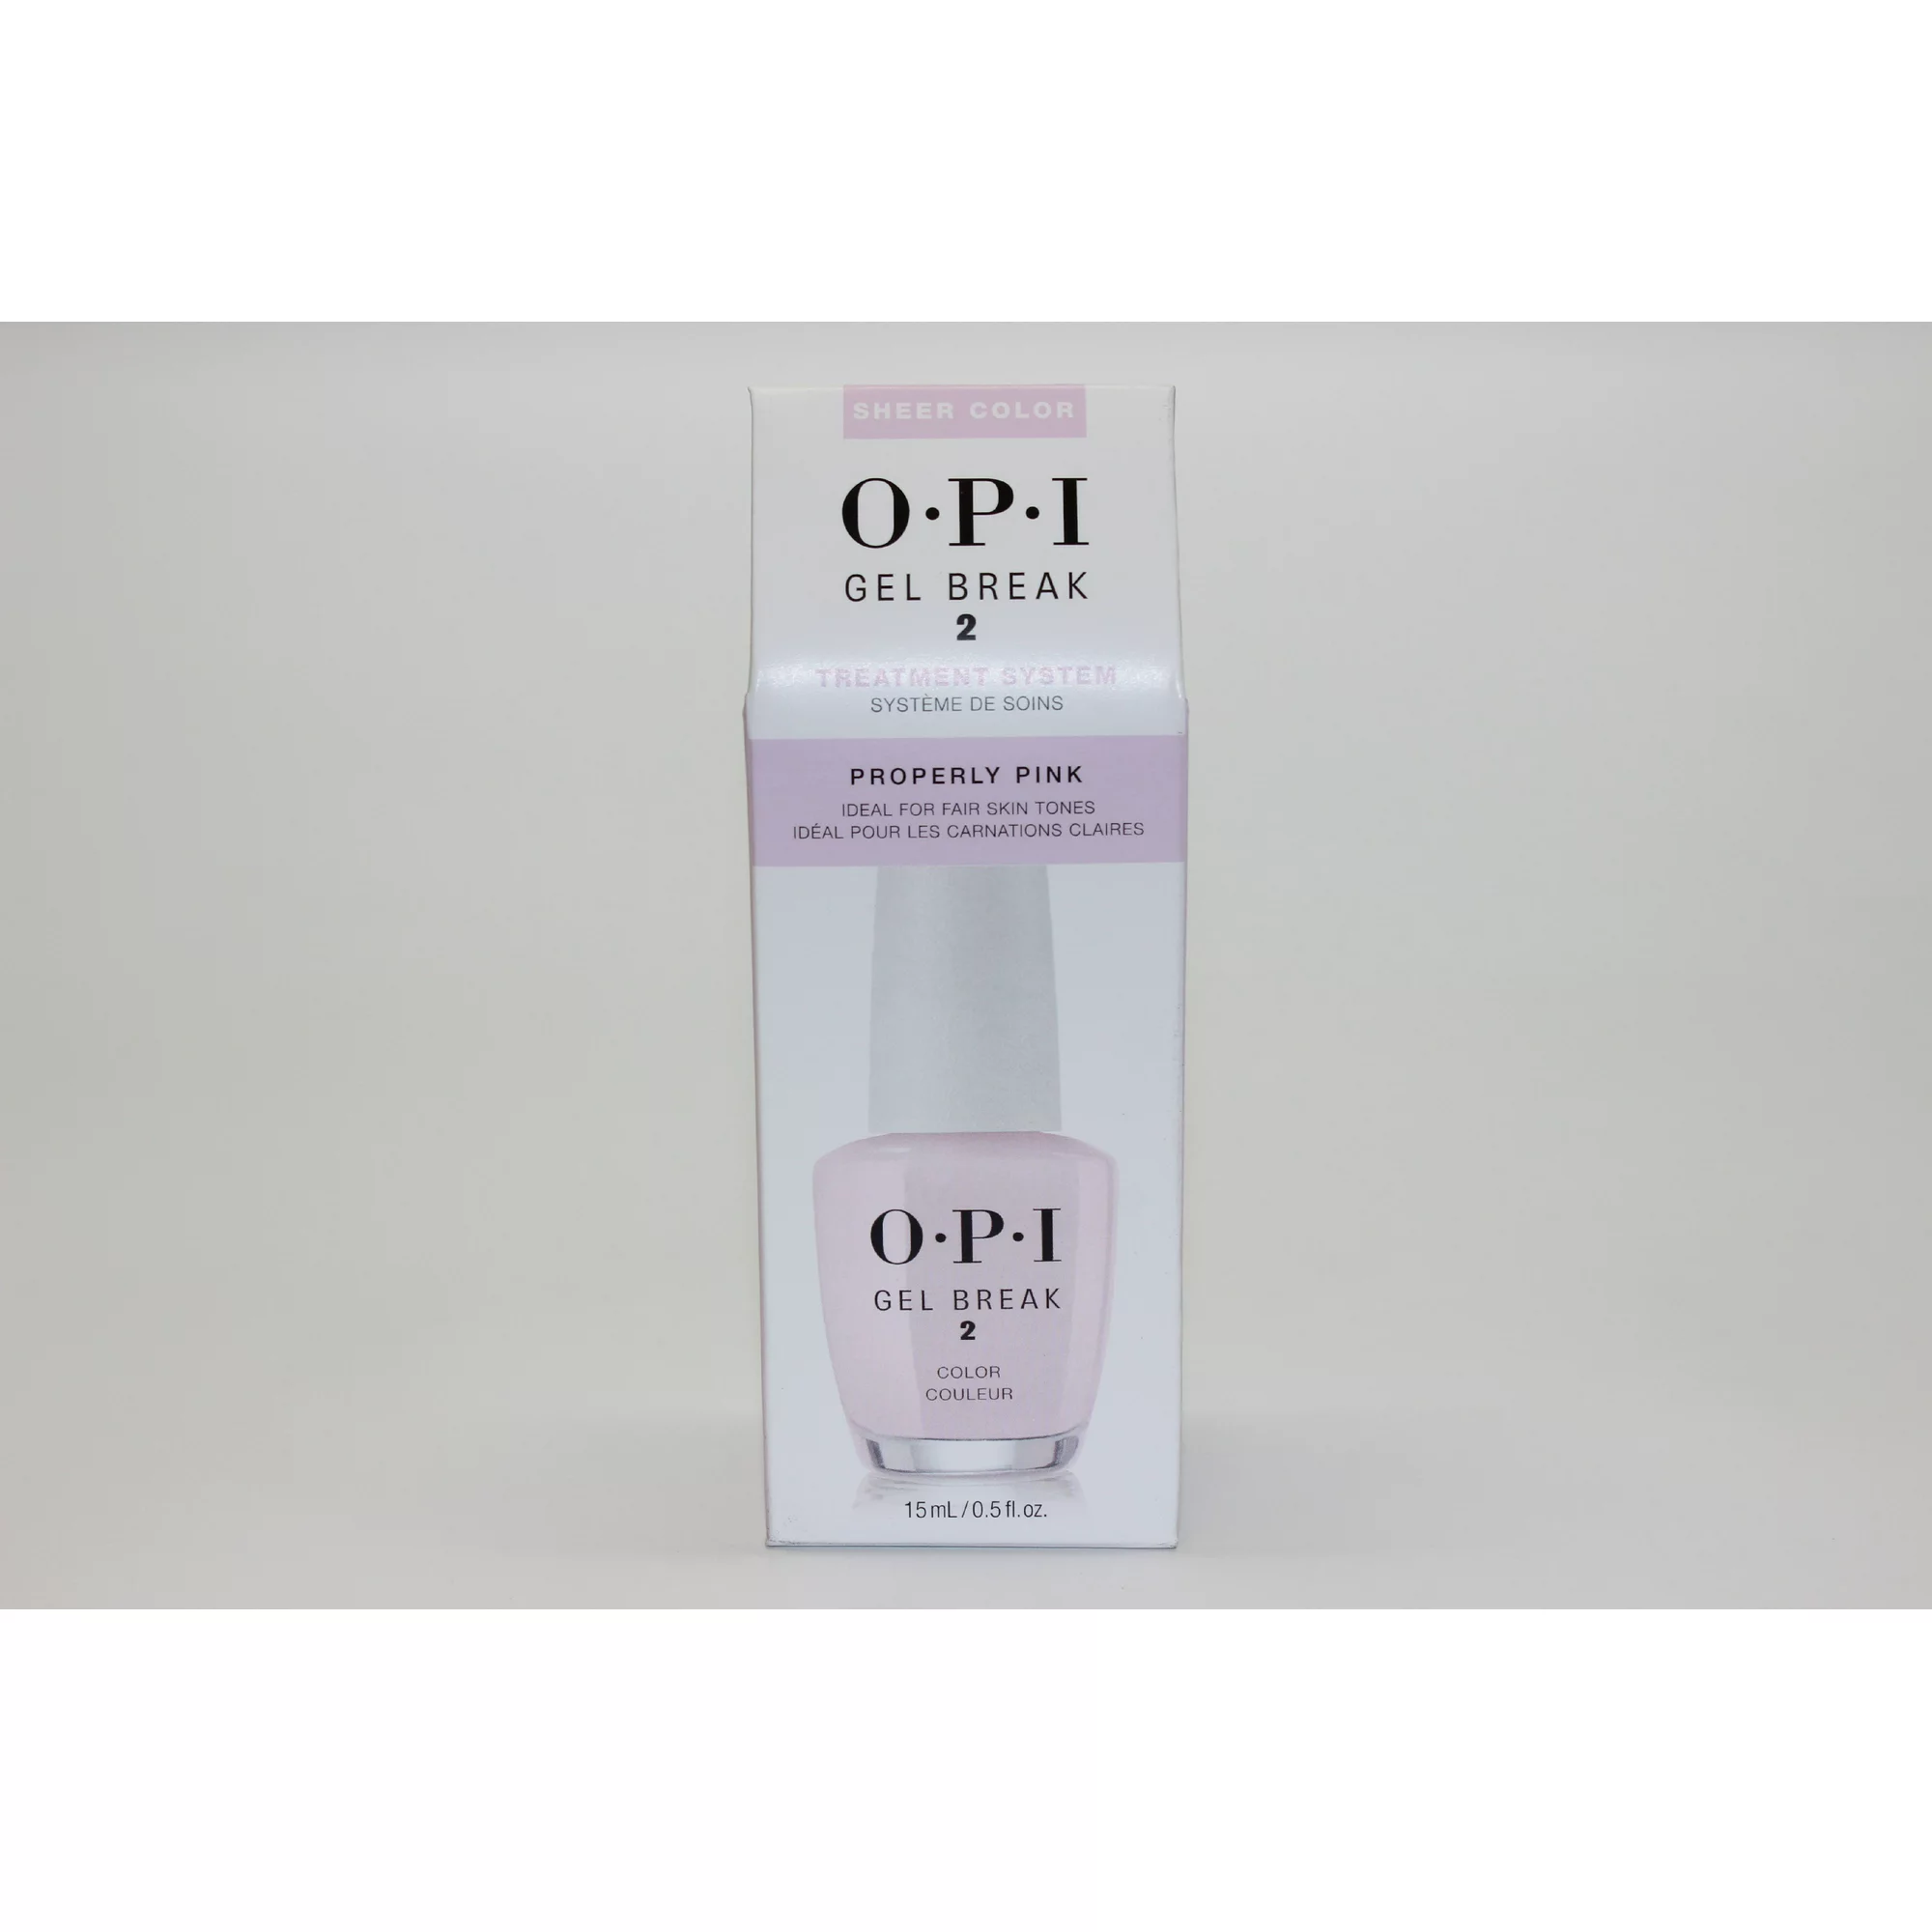 OPI Nail Treatment - Gel Break #2 - Properly Pink (Sheer Color)